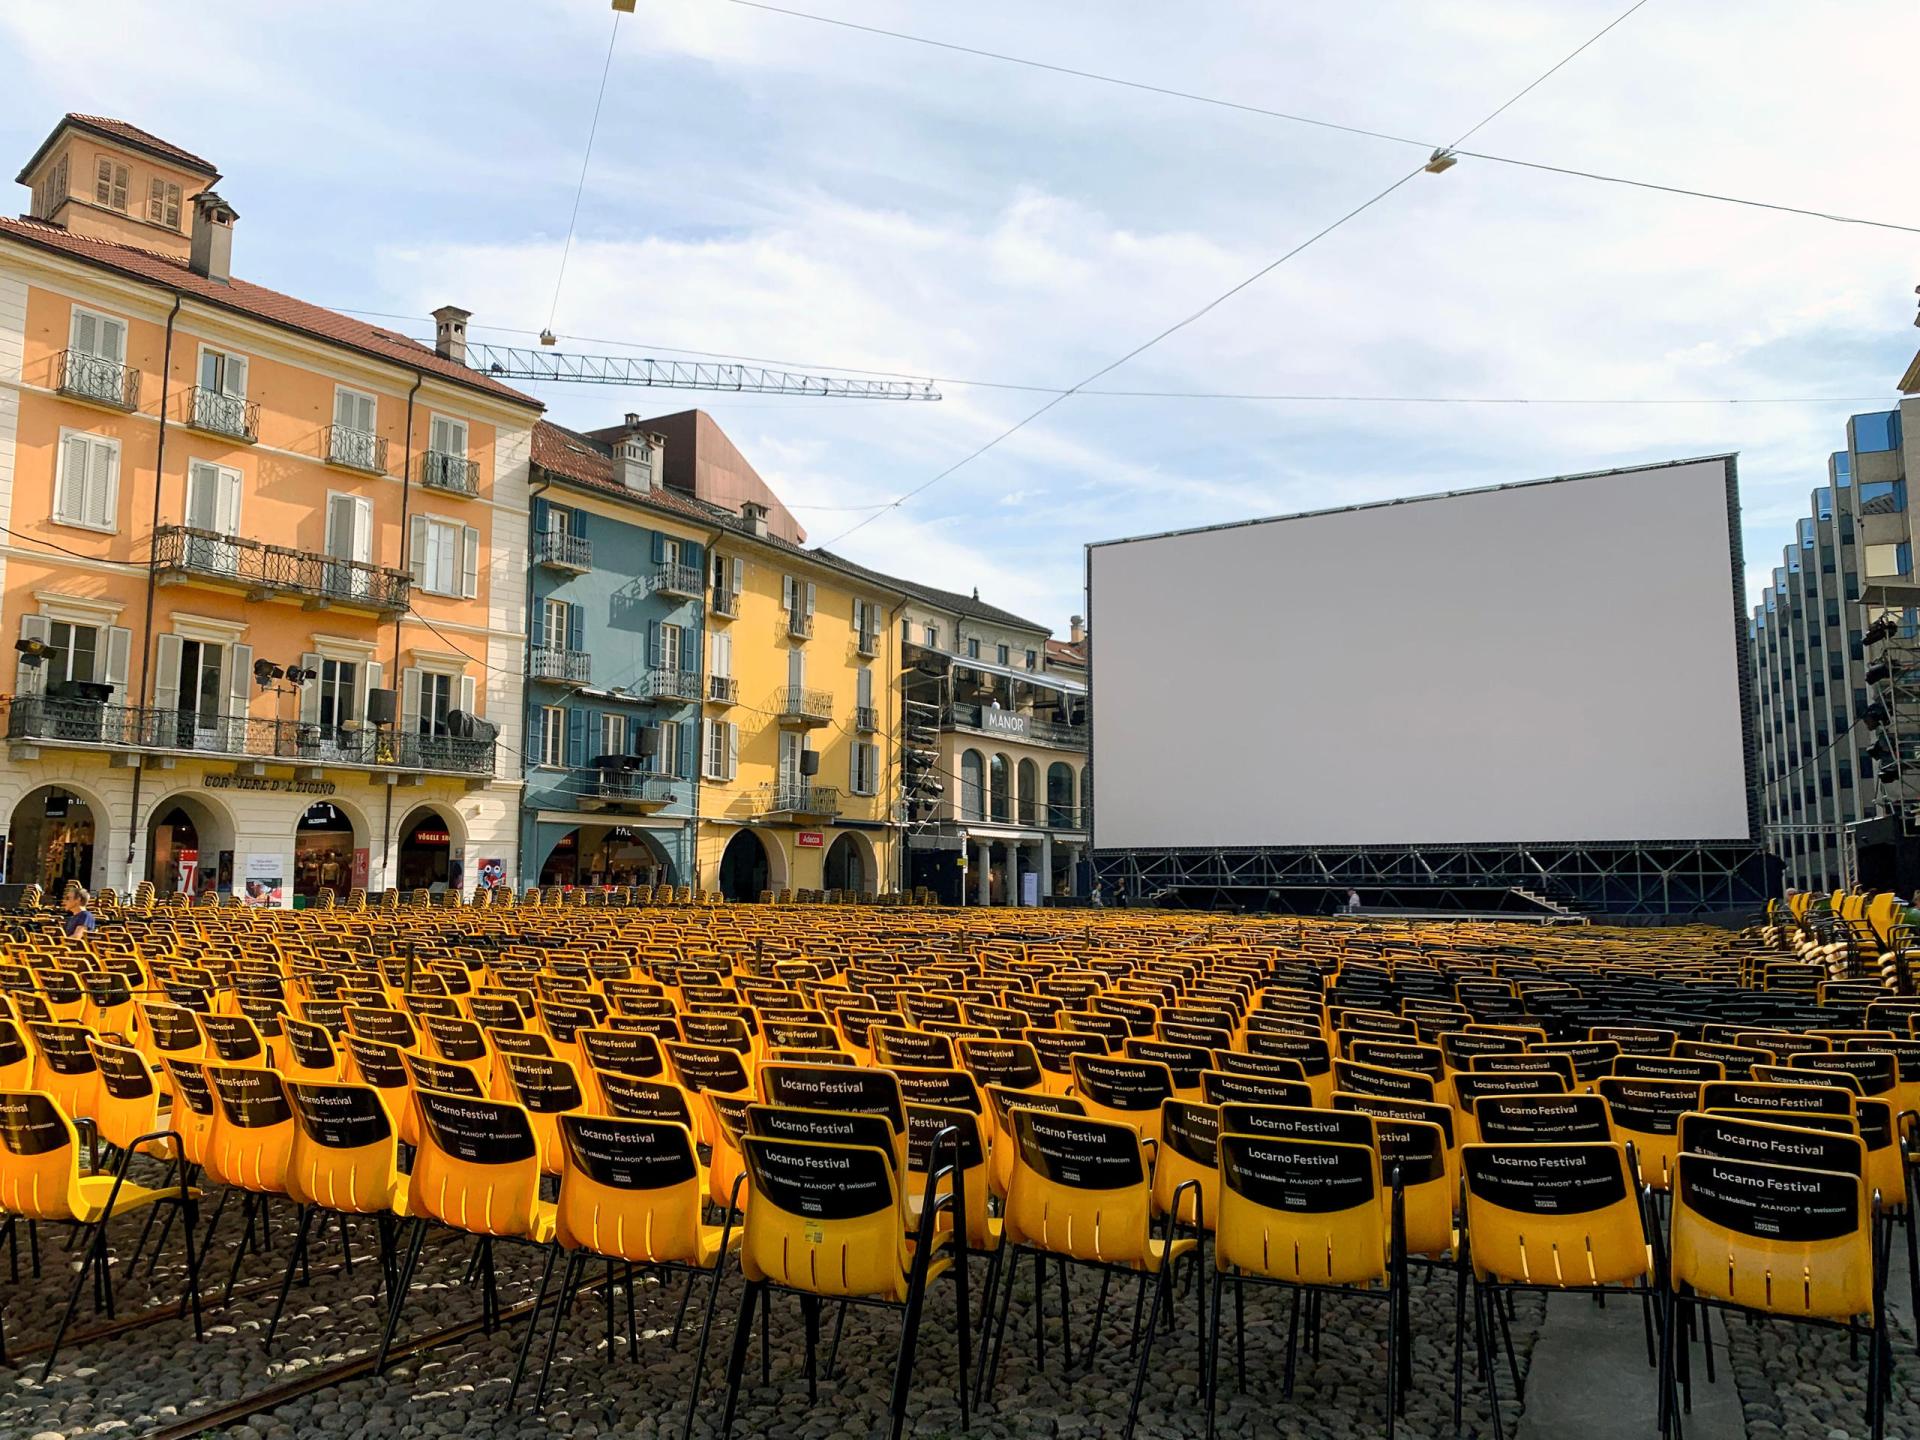 Daily dispatches from the 74th Locarno Film Festival - SWI 